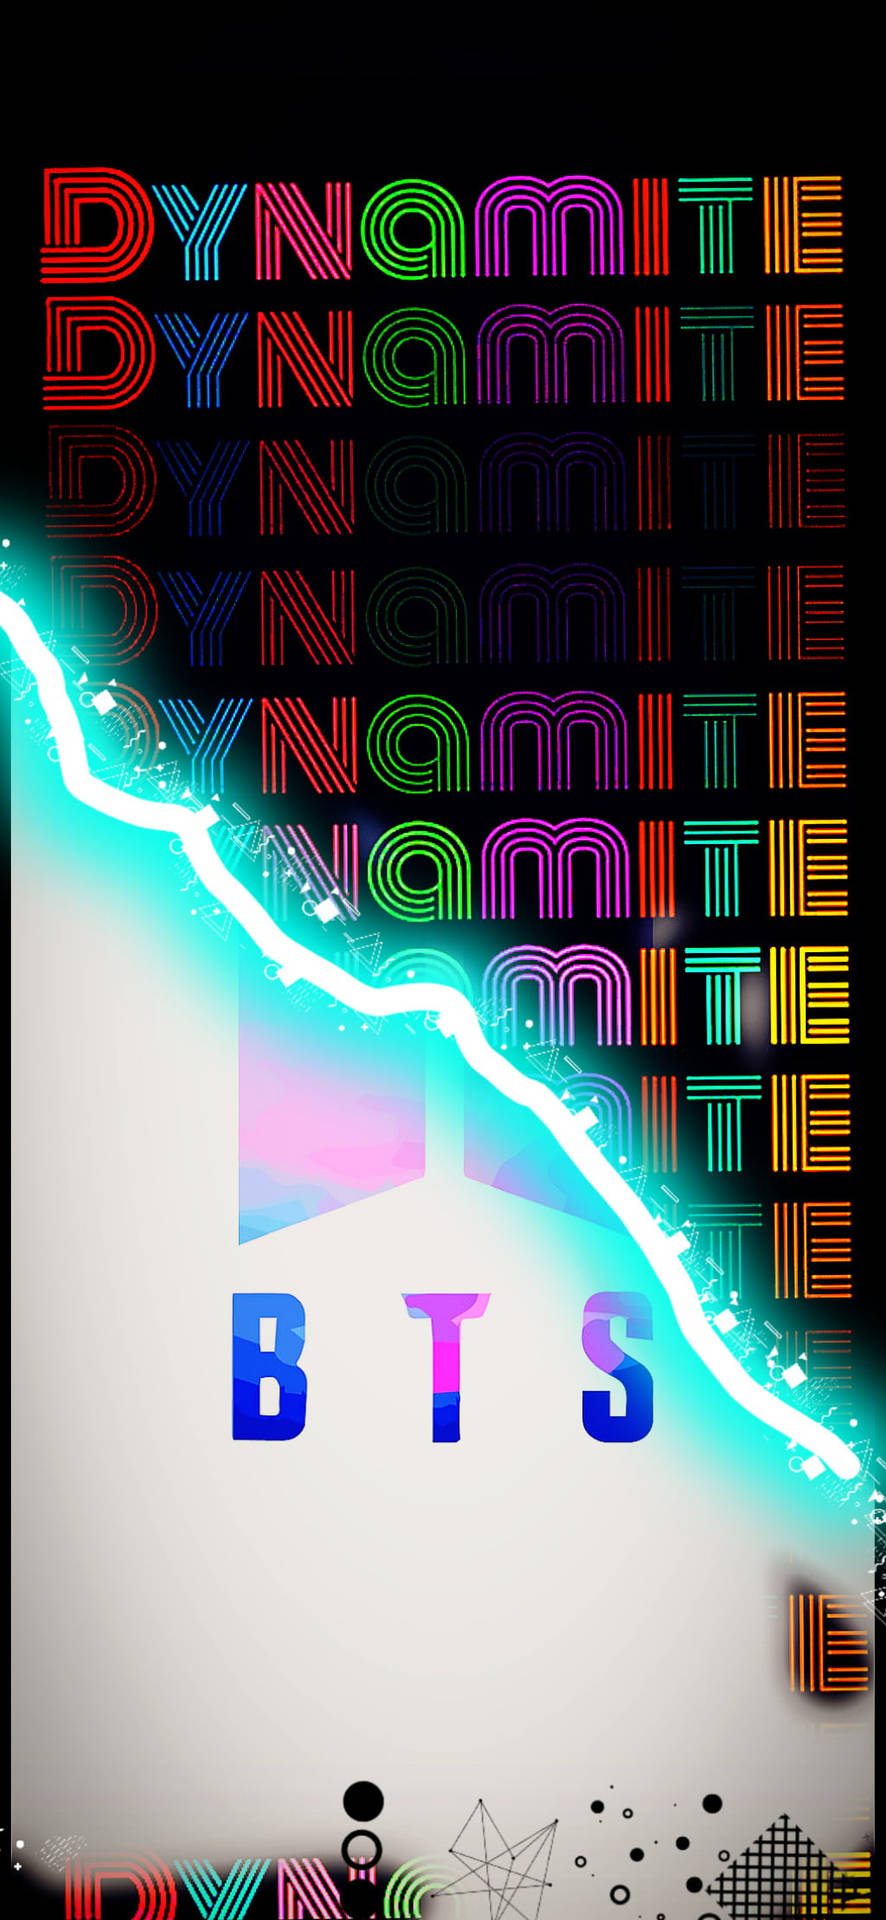 Cool Bts Dynamite Transition Effect Background